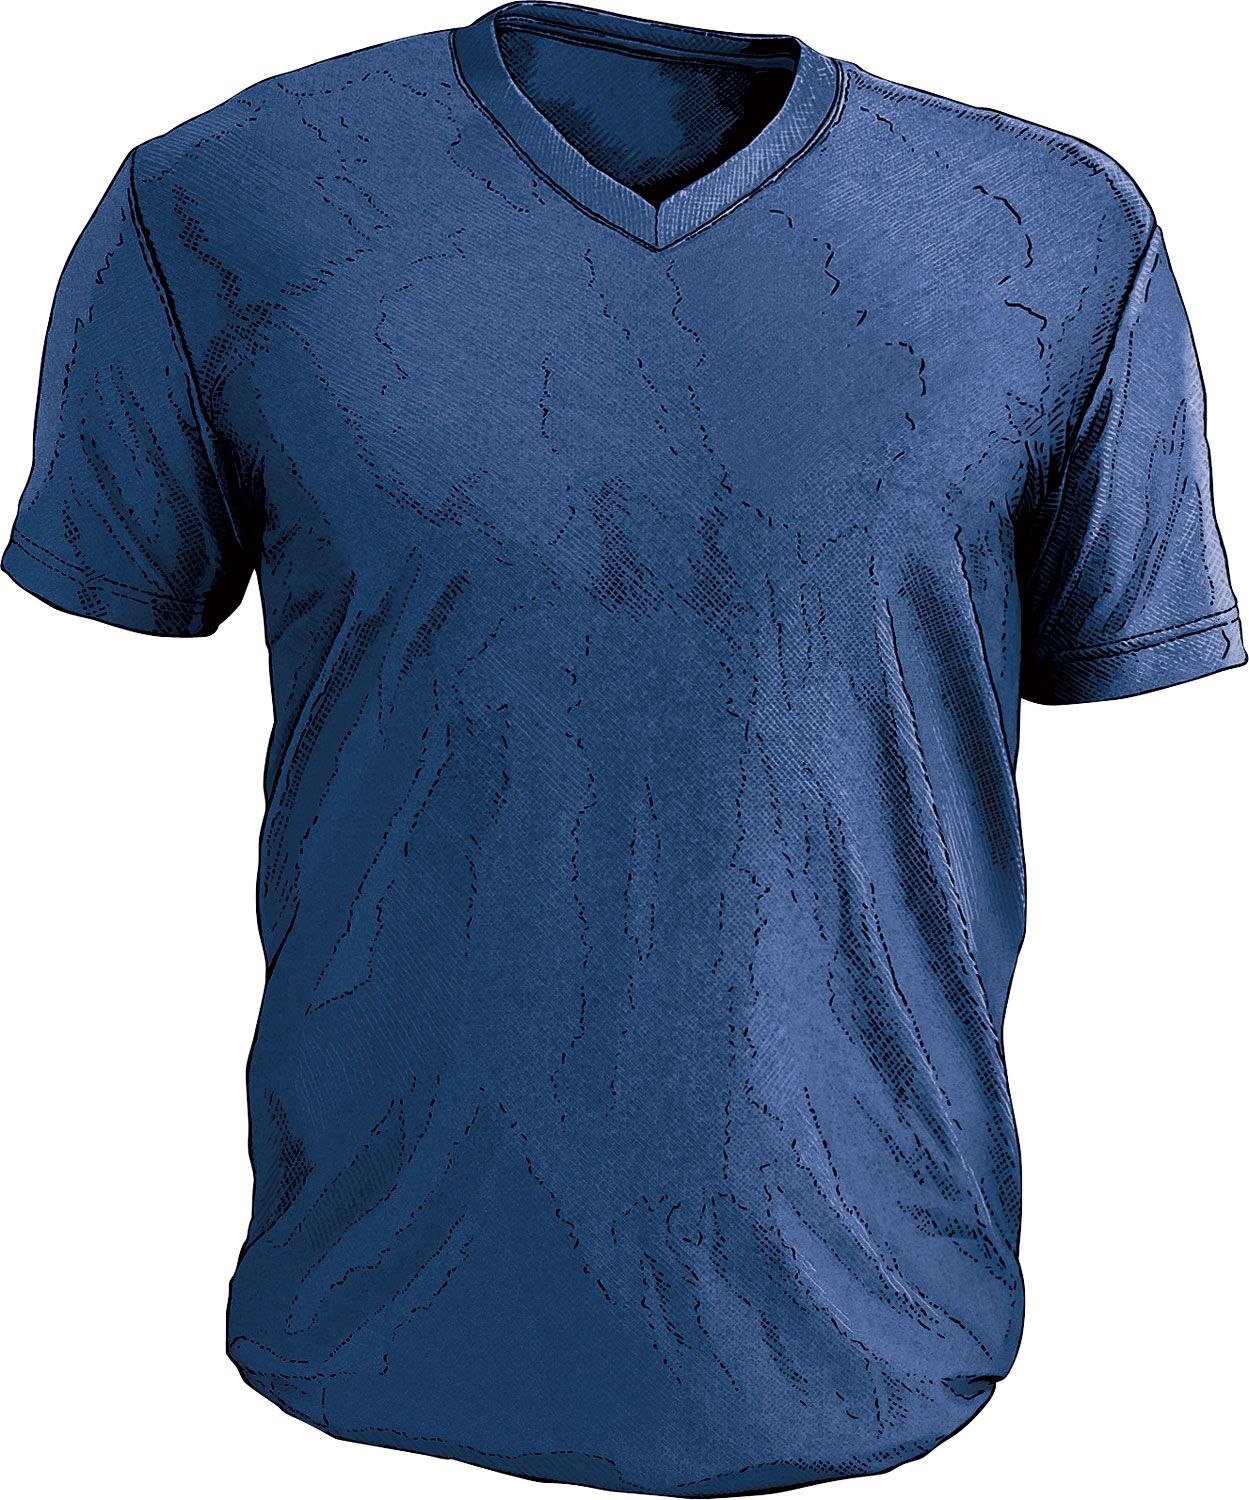 sweat nude in men shirts